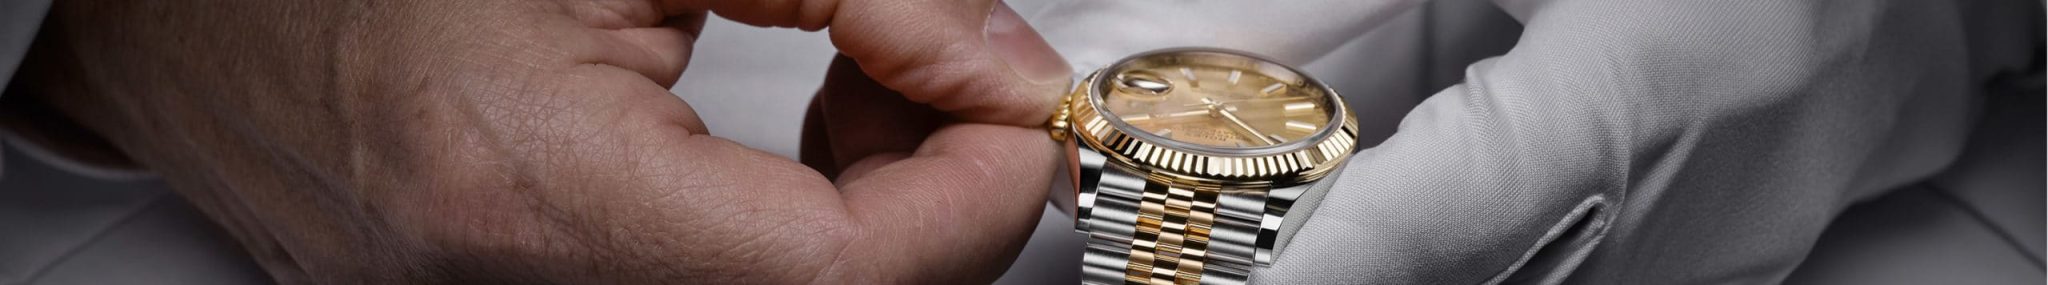 Rolex Servicing Your Rolex | Rolex Official Retailer - The Time Place Singapore